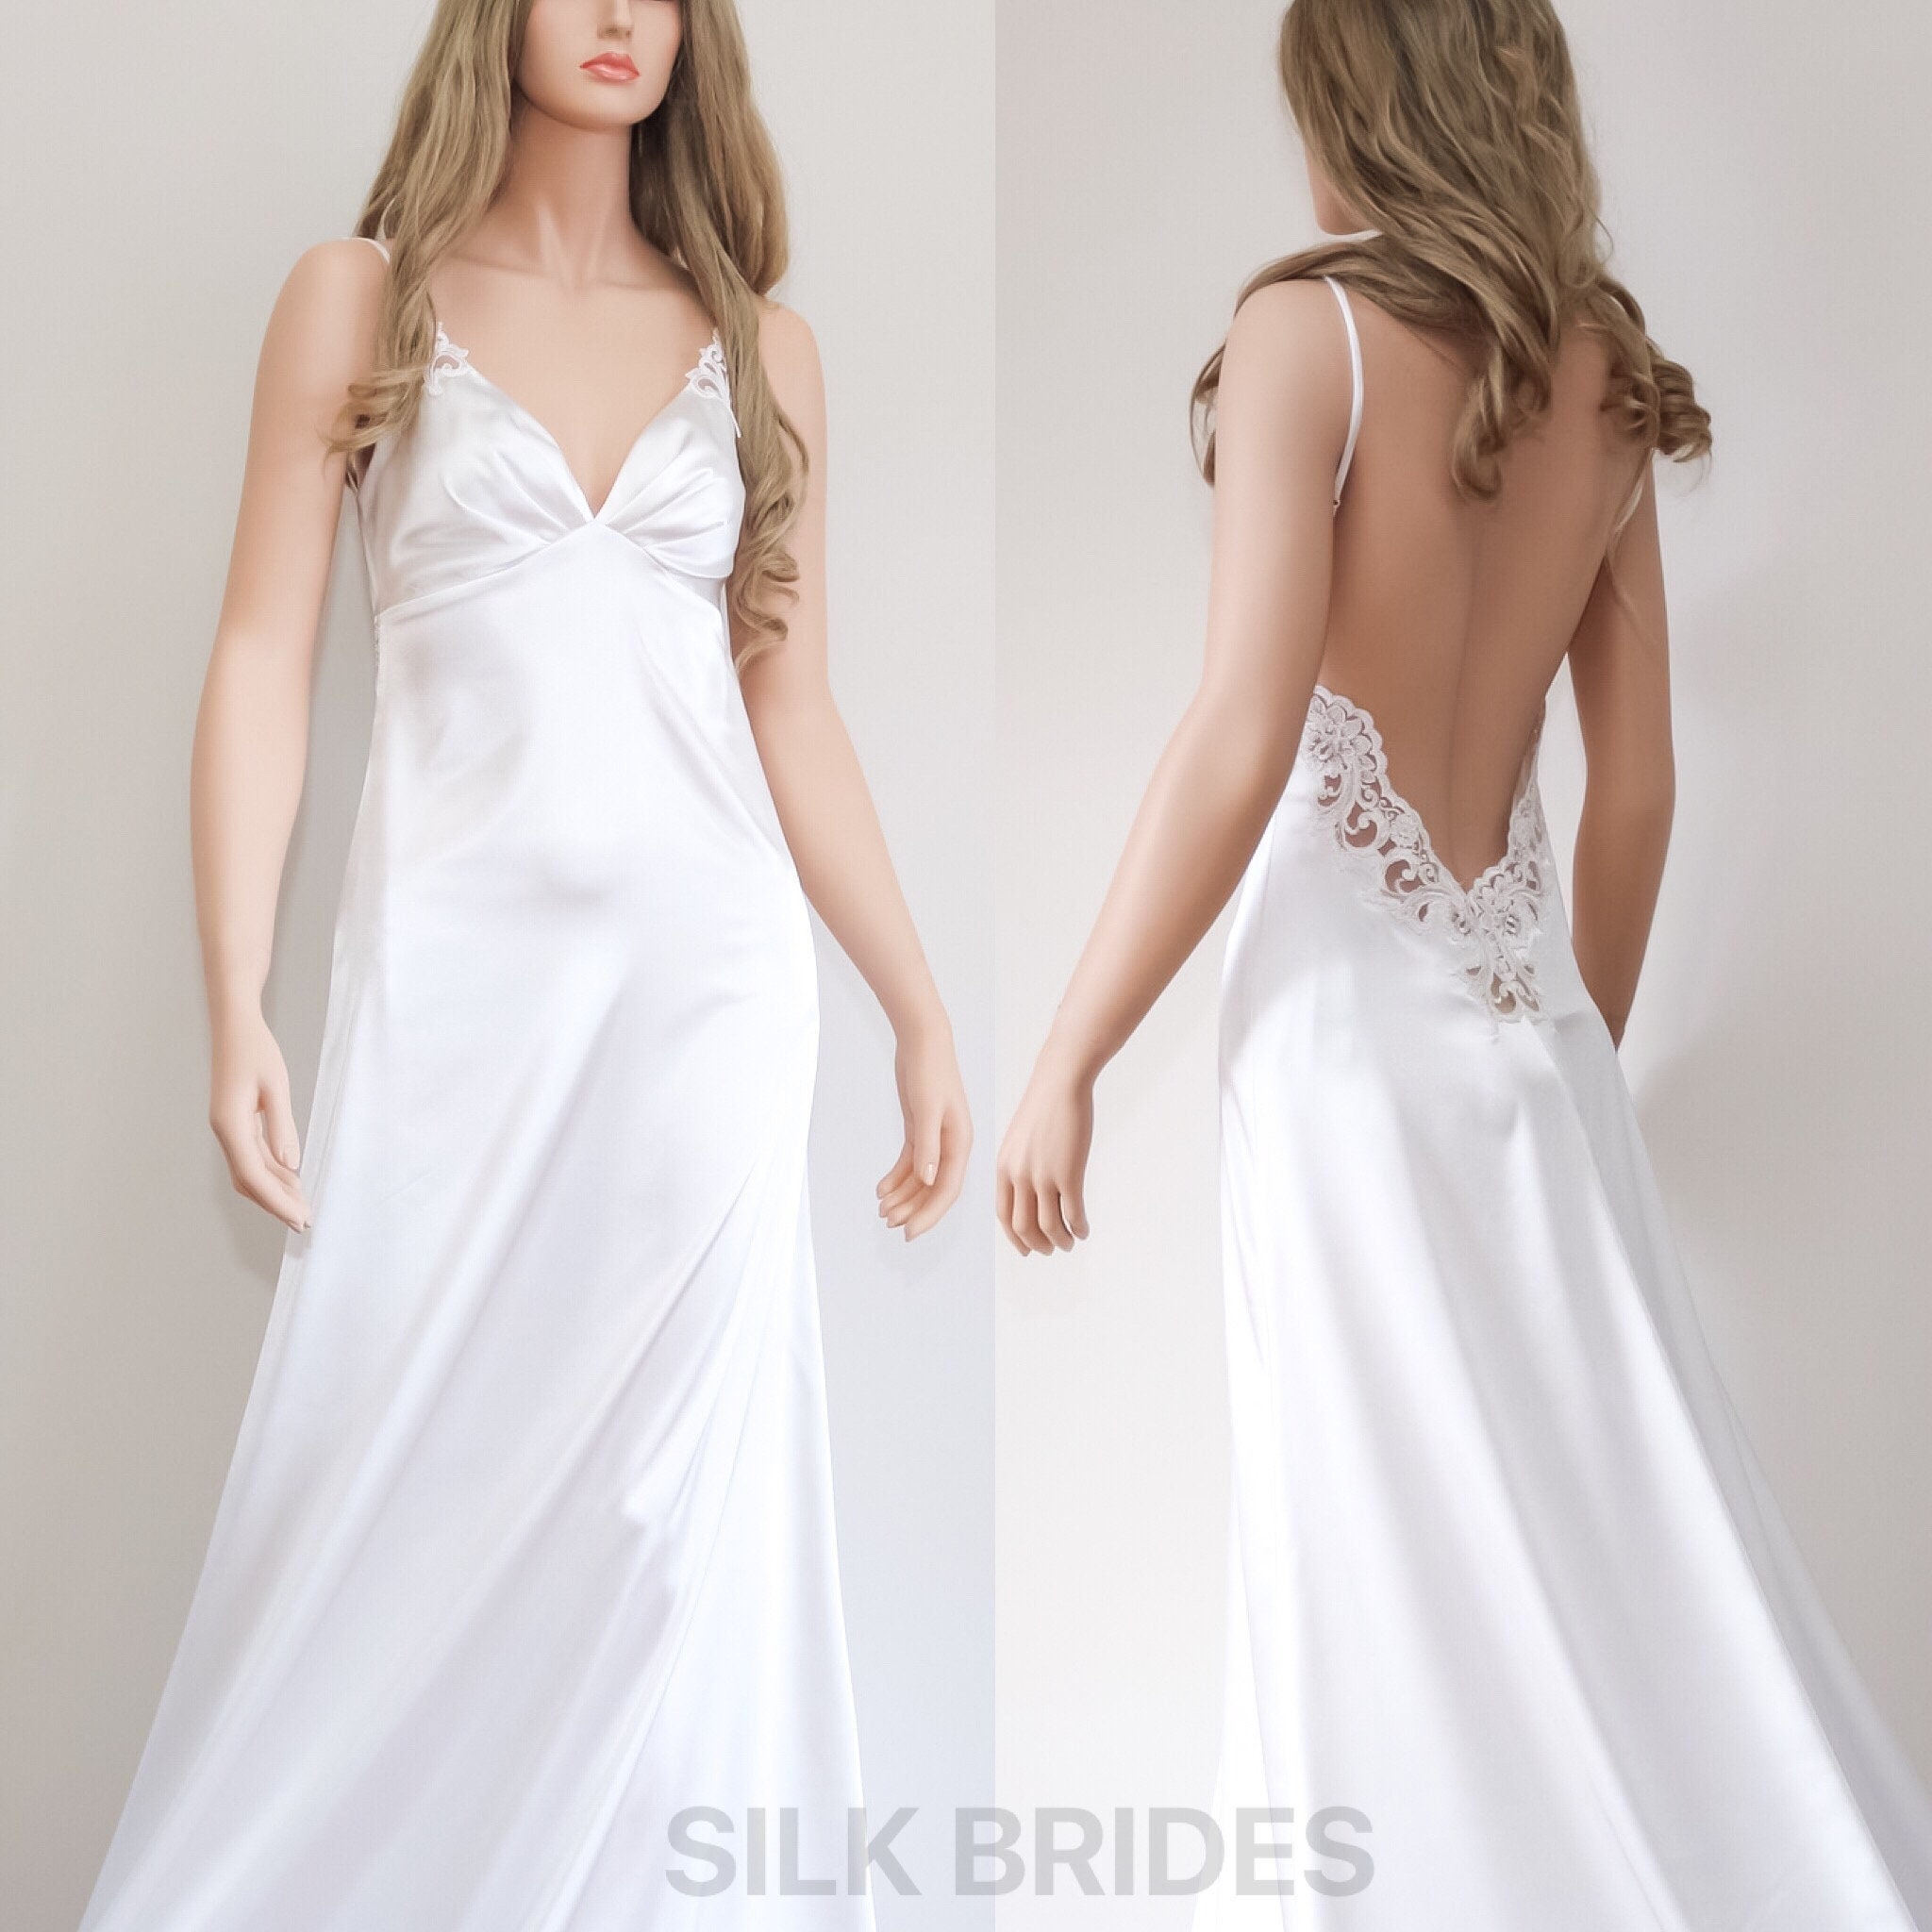 Sexy White Long Backless Satin Nightgown, Honeymoon Bridal